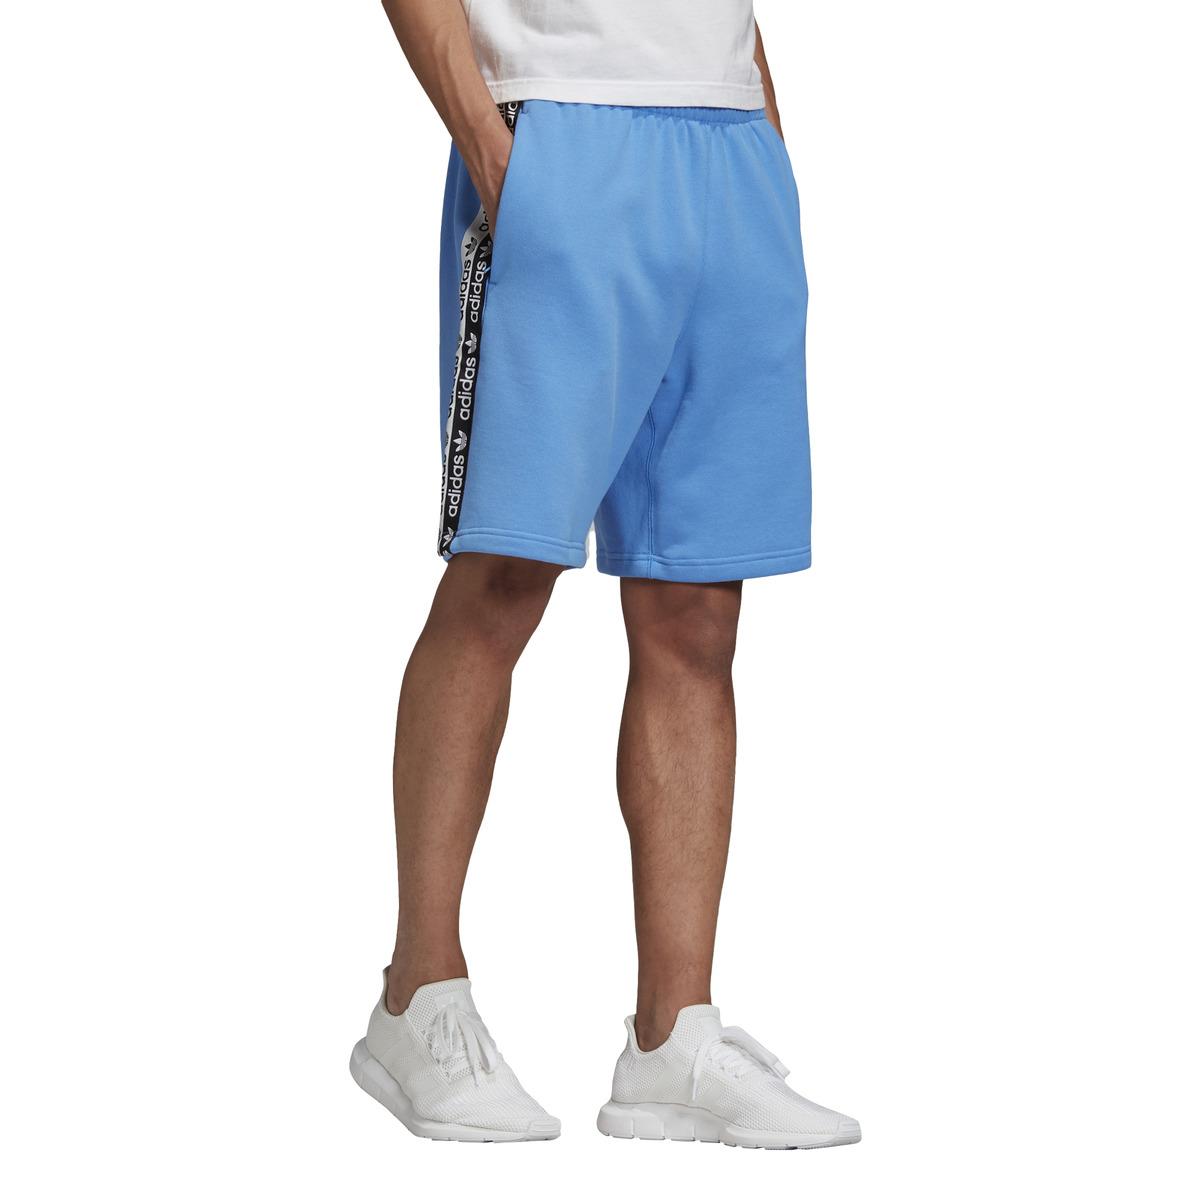 adidas Originals Cotton R.y.v. Shorts in Blue for Men - Lyst